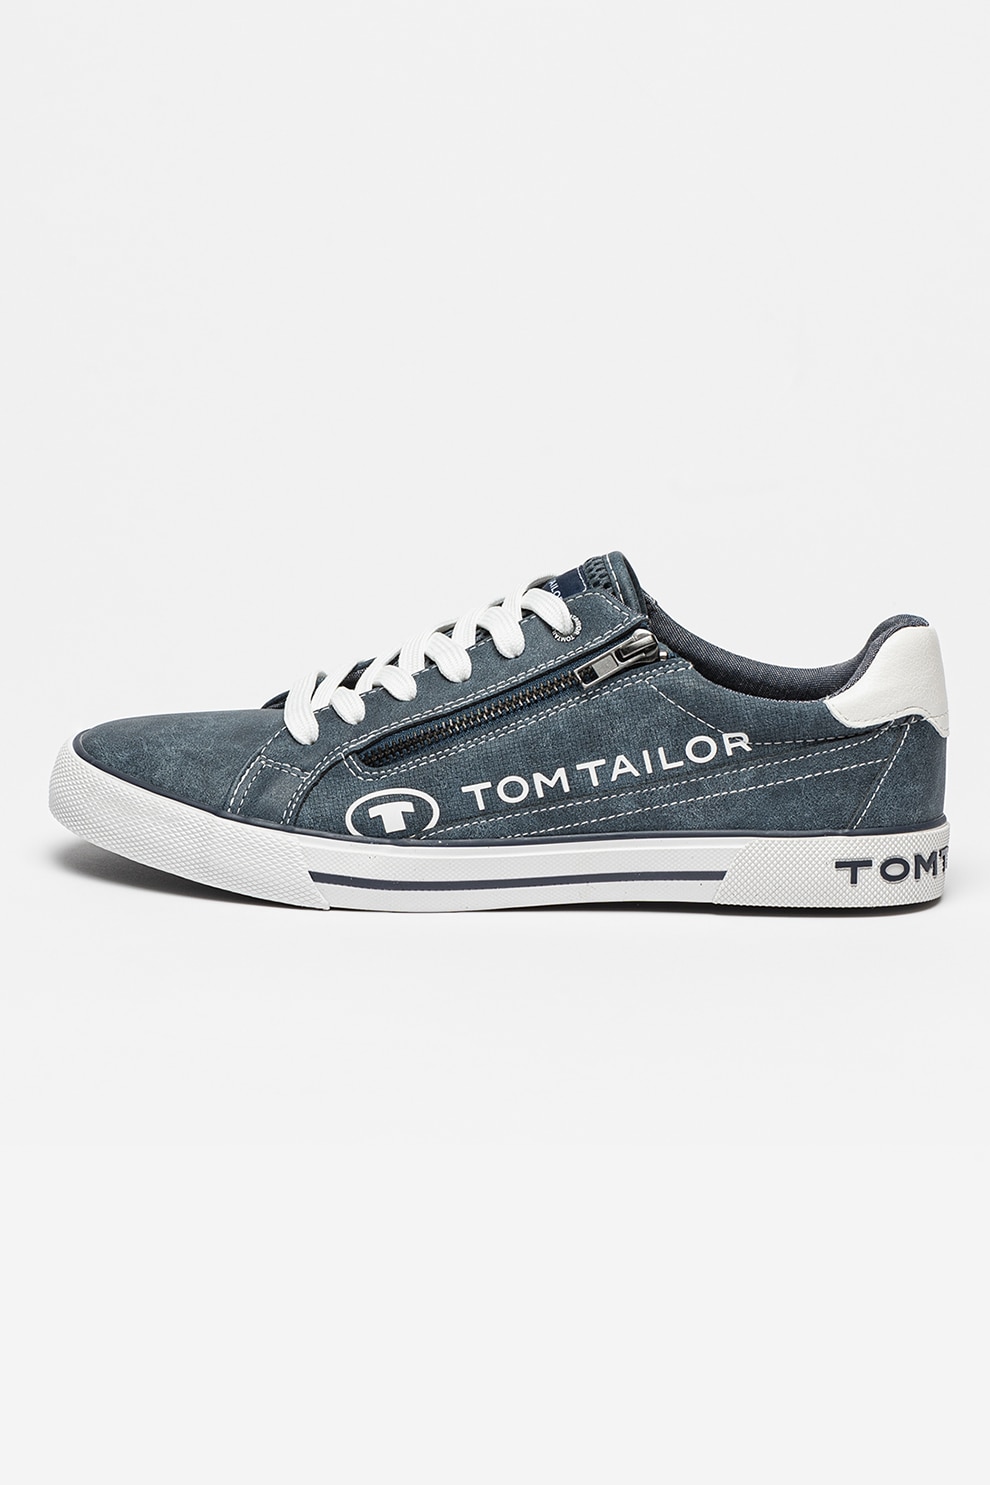 good looking Trend prosperity Tom Tailor, Pantofi sport de piele ecologica cu logo, Albastru inchis, 43 -  eMAG.ro